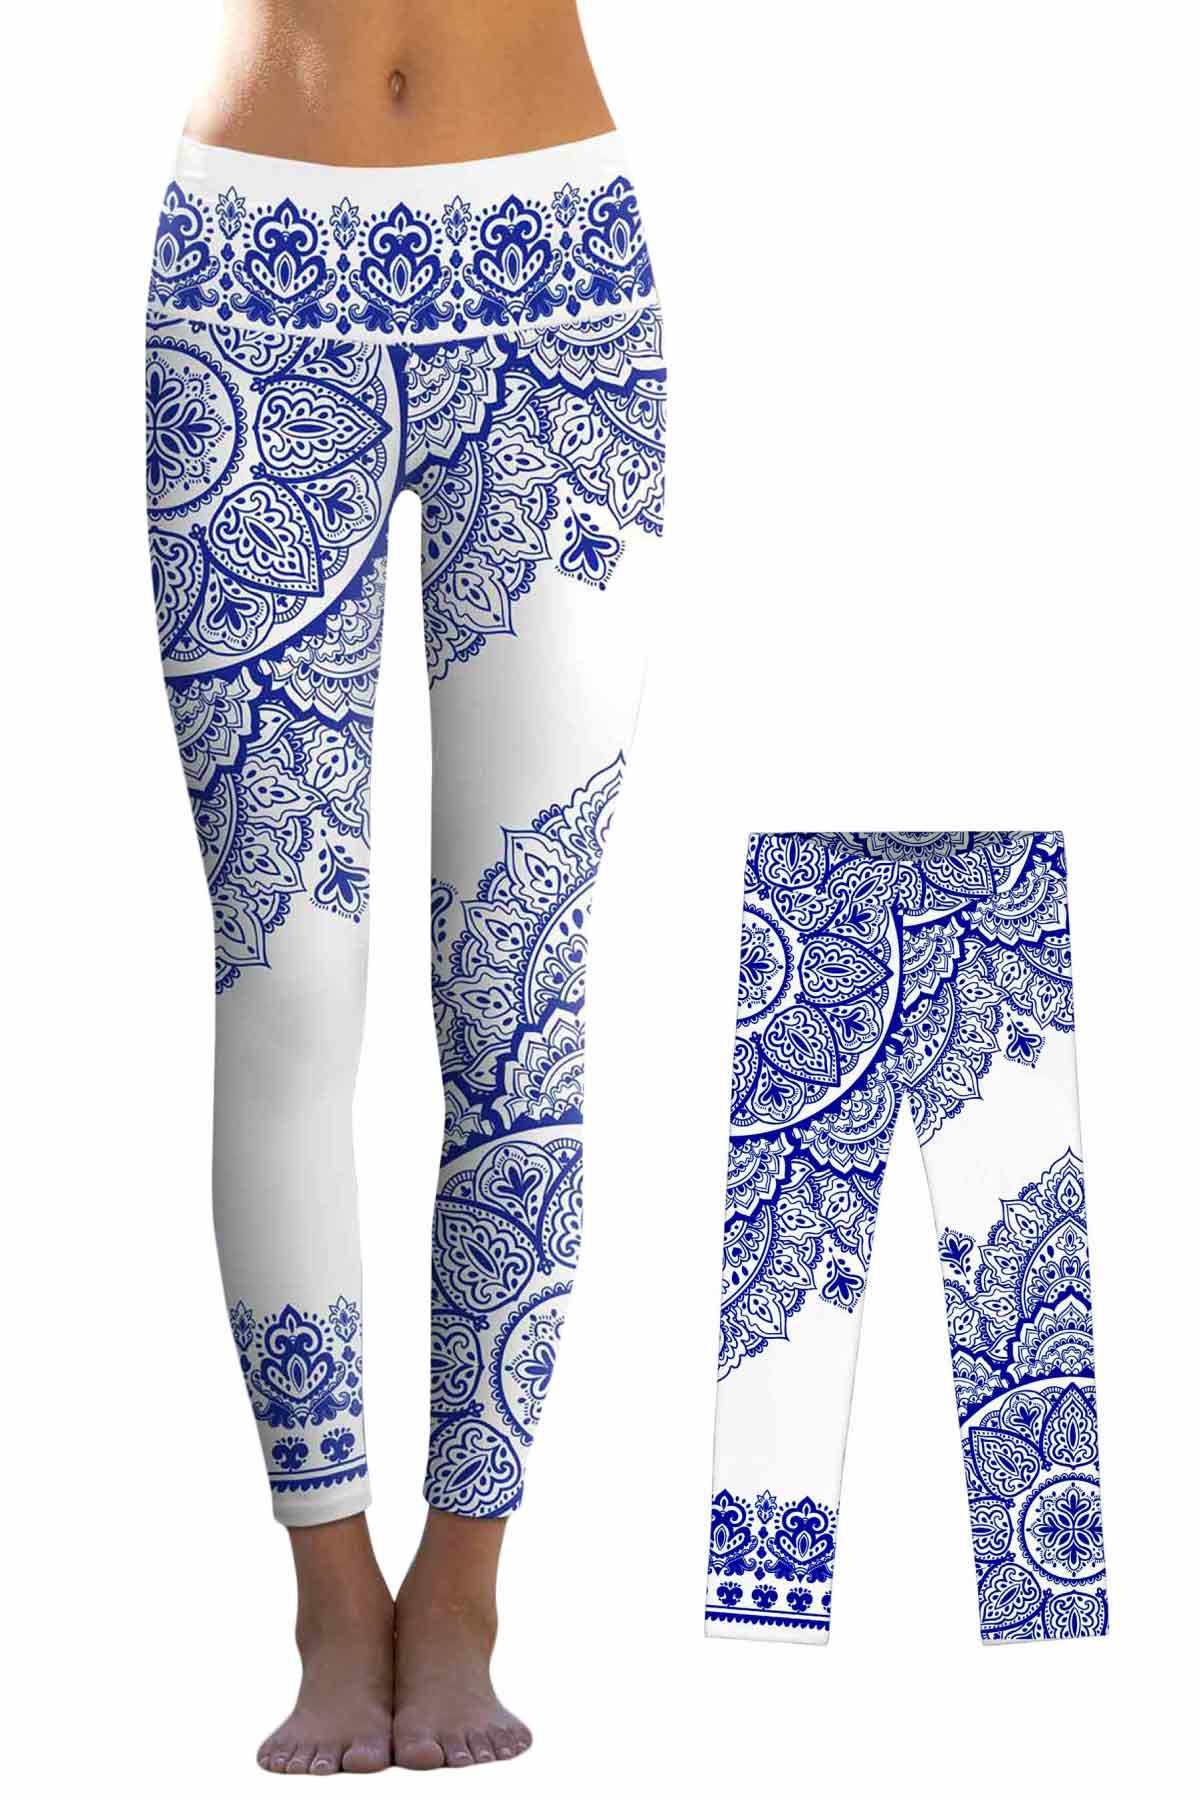 Nirvana Lucy White Blue Geometric Boho Printed Leggings - Mommy and Me - Pineapple Clothing